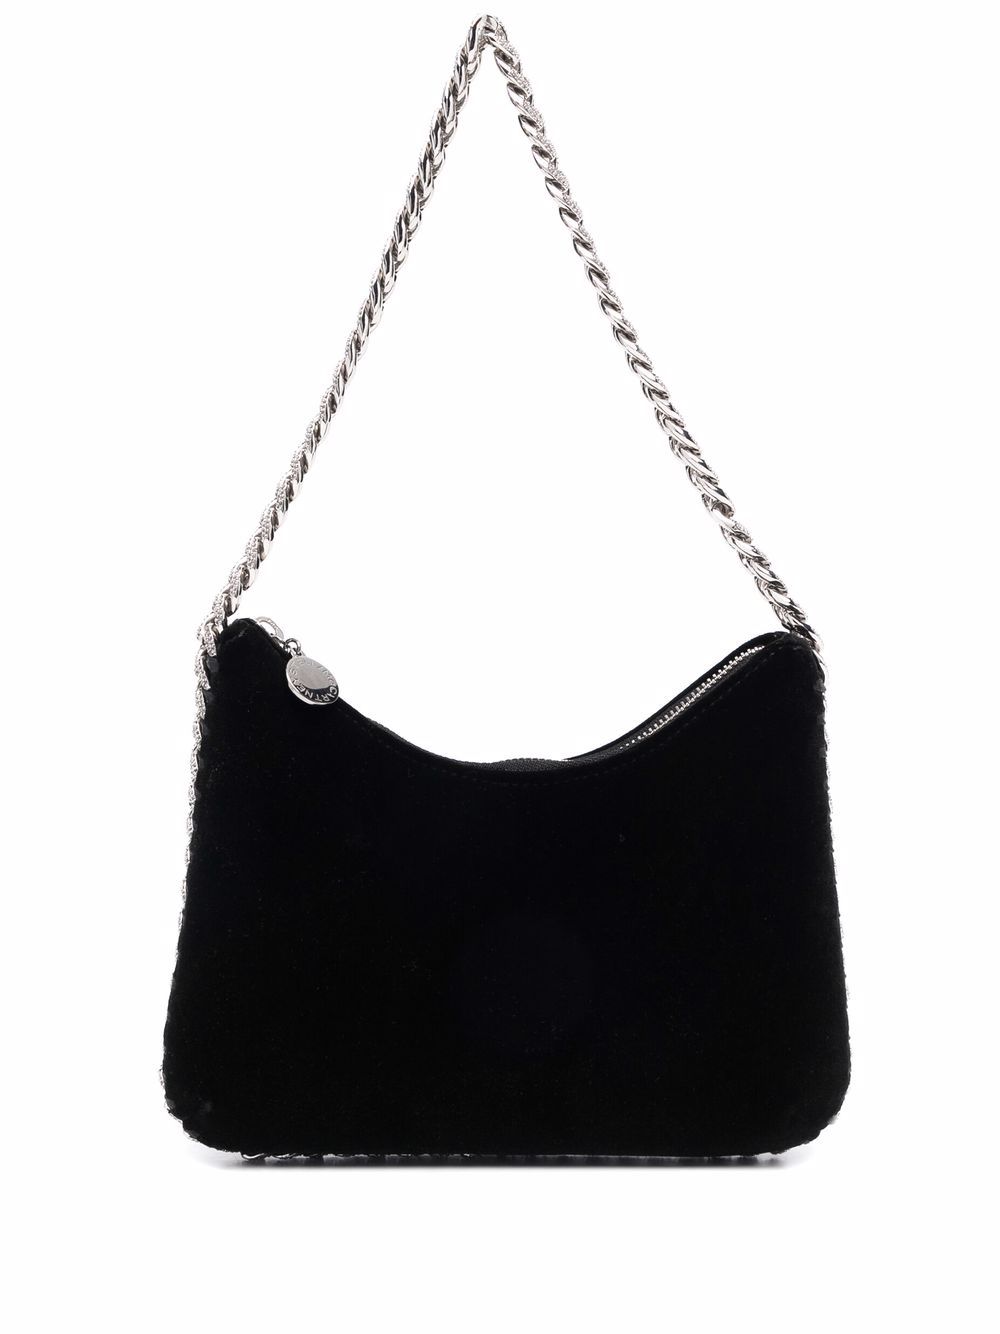 Stella McCartney Falabella crystal chain shoulder bag - Black